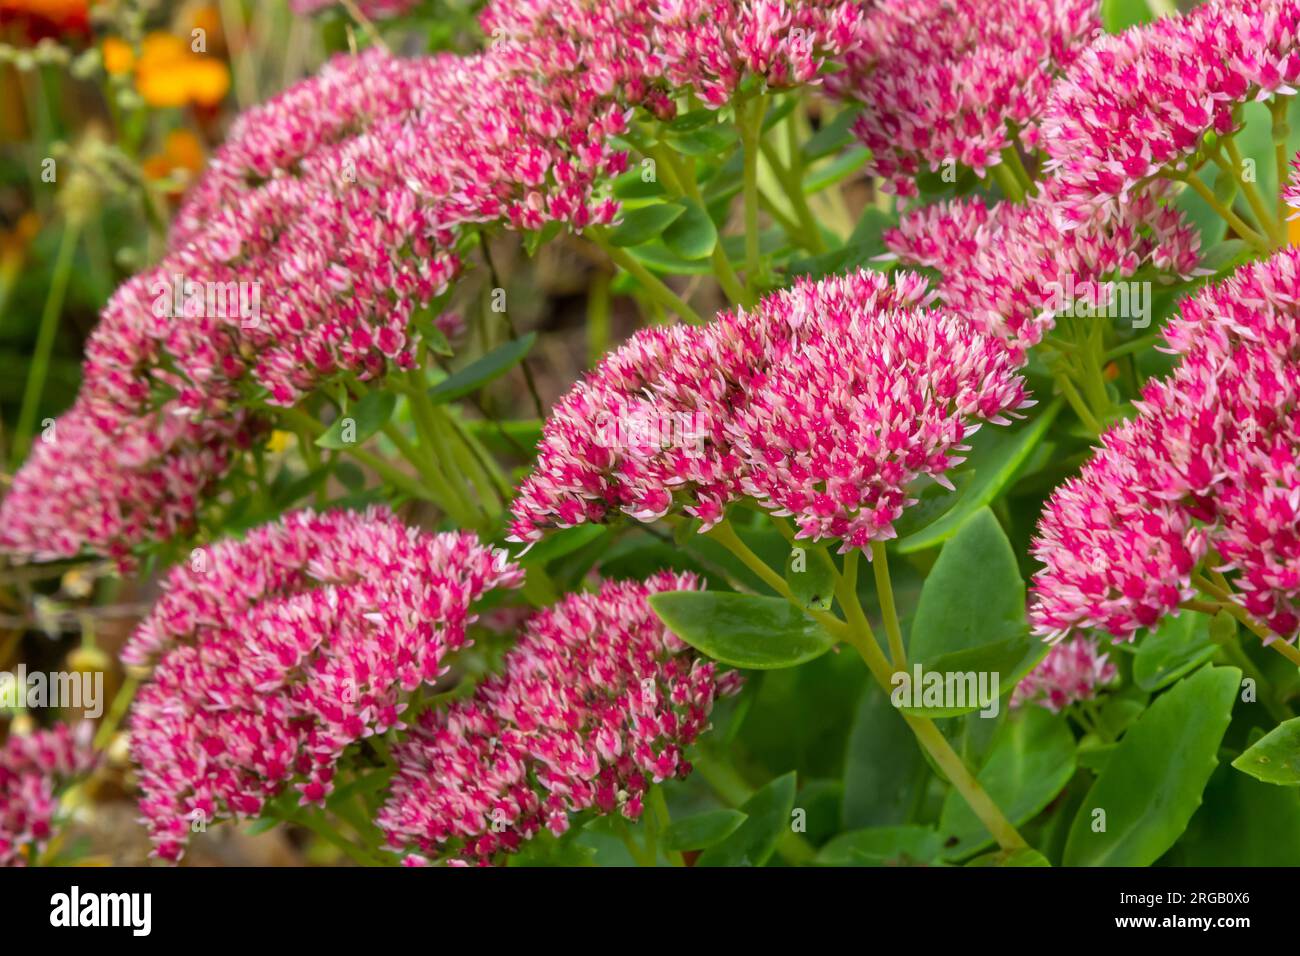 Red flowering sedum plant, Hylotelephium telephium. beautiful autumn flowers in the garden. Stock Photo